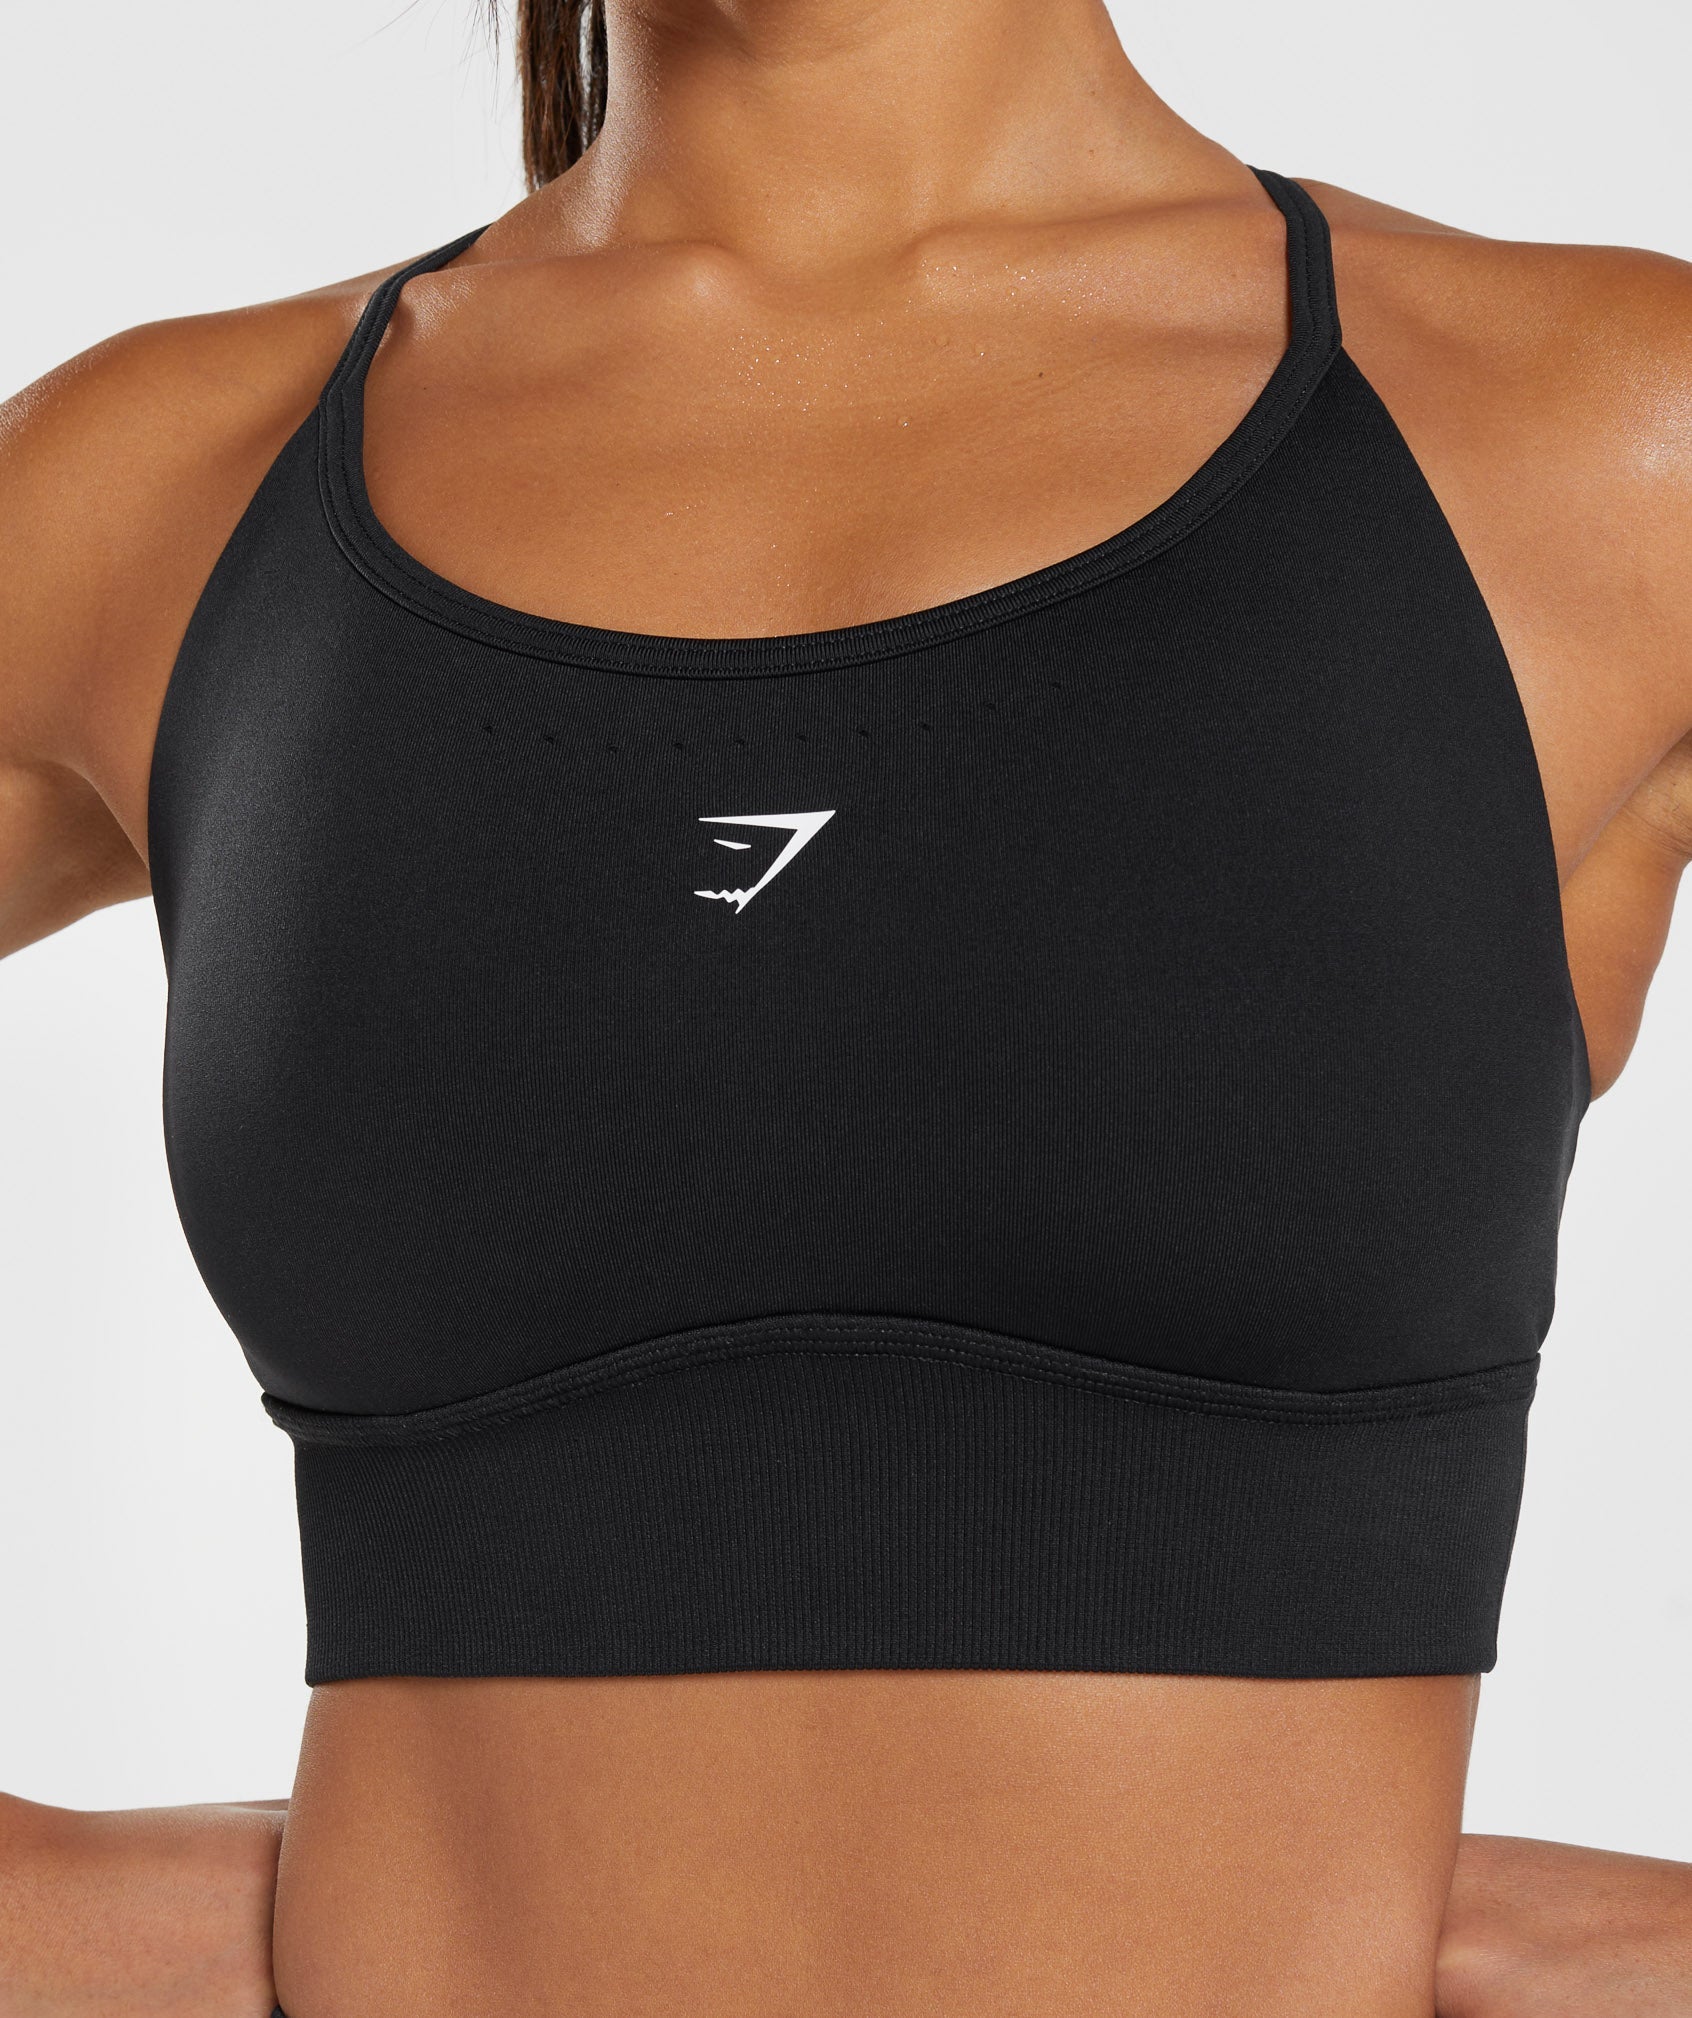 Black Sports Bras  The Workout Wardrobe Staple - Gymshark